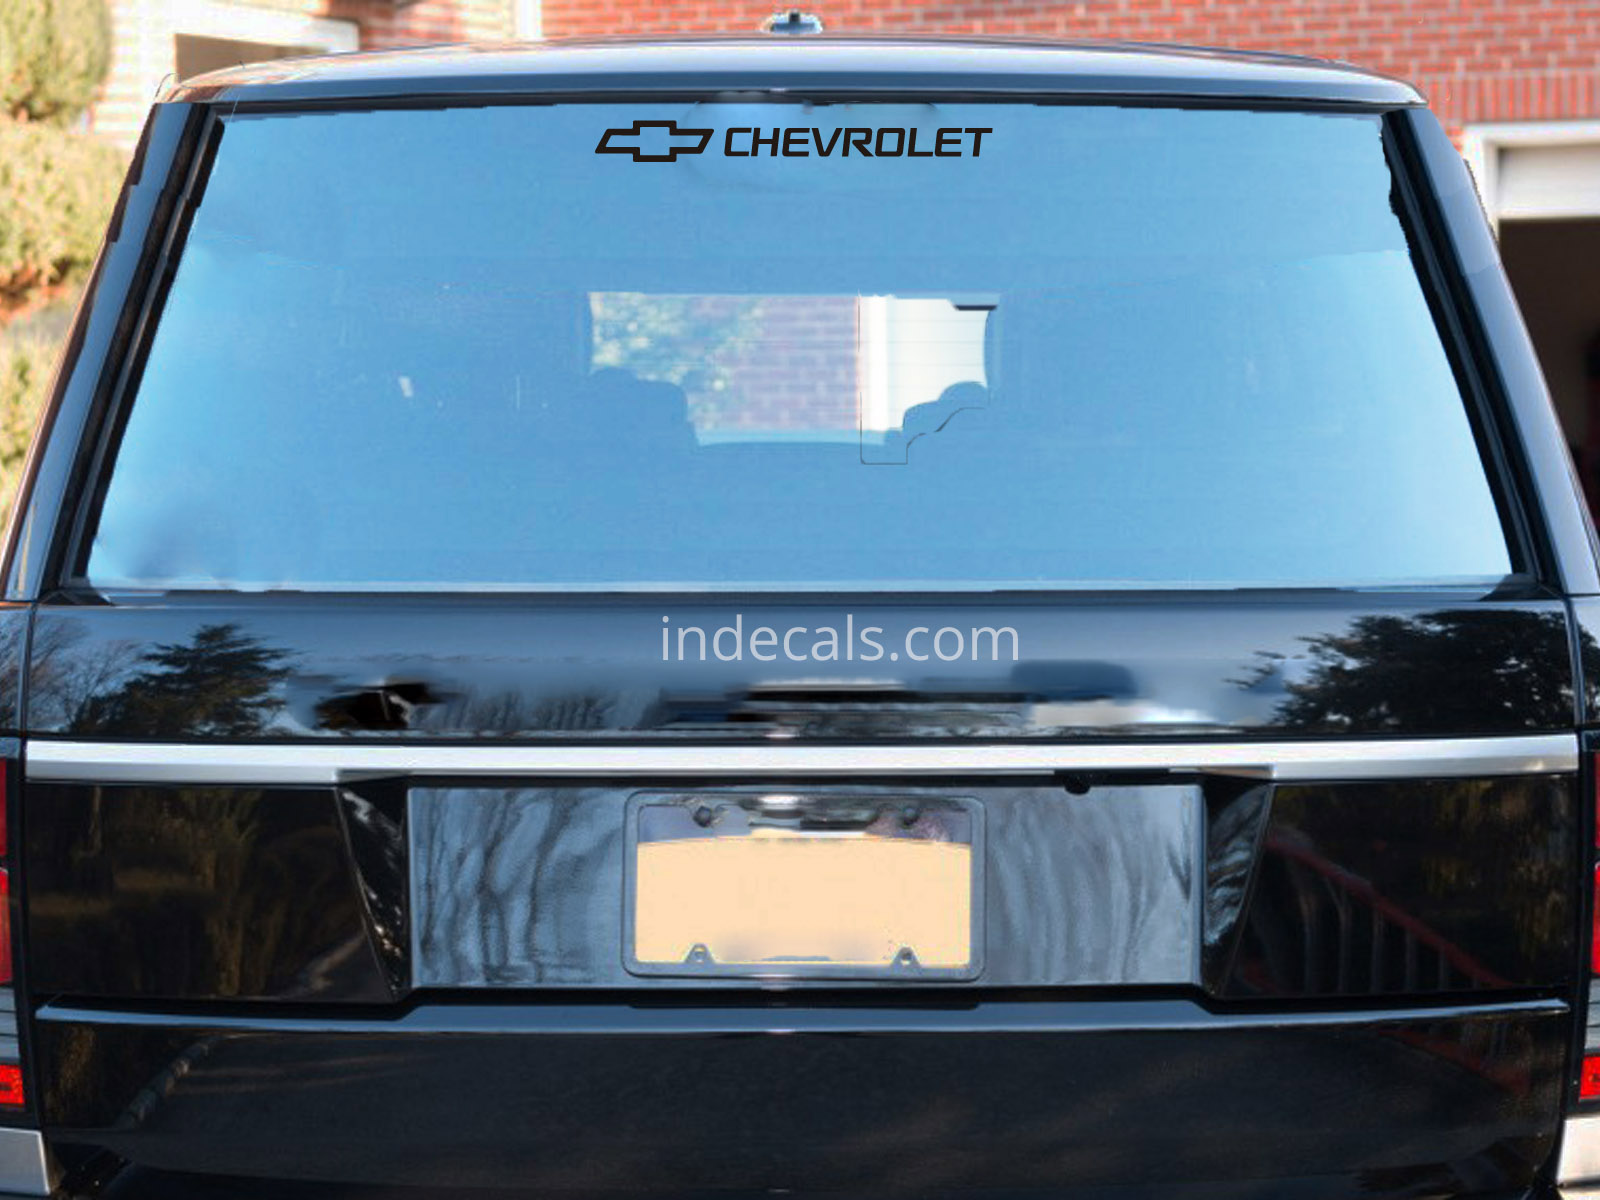 1 x Chevrolet Sticker for Windshield or Back Window - Black